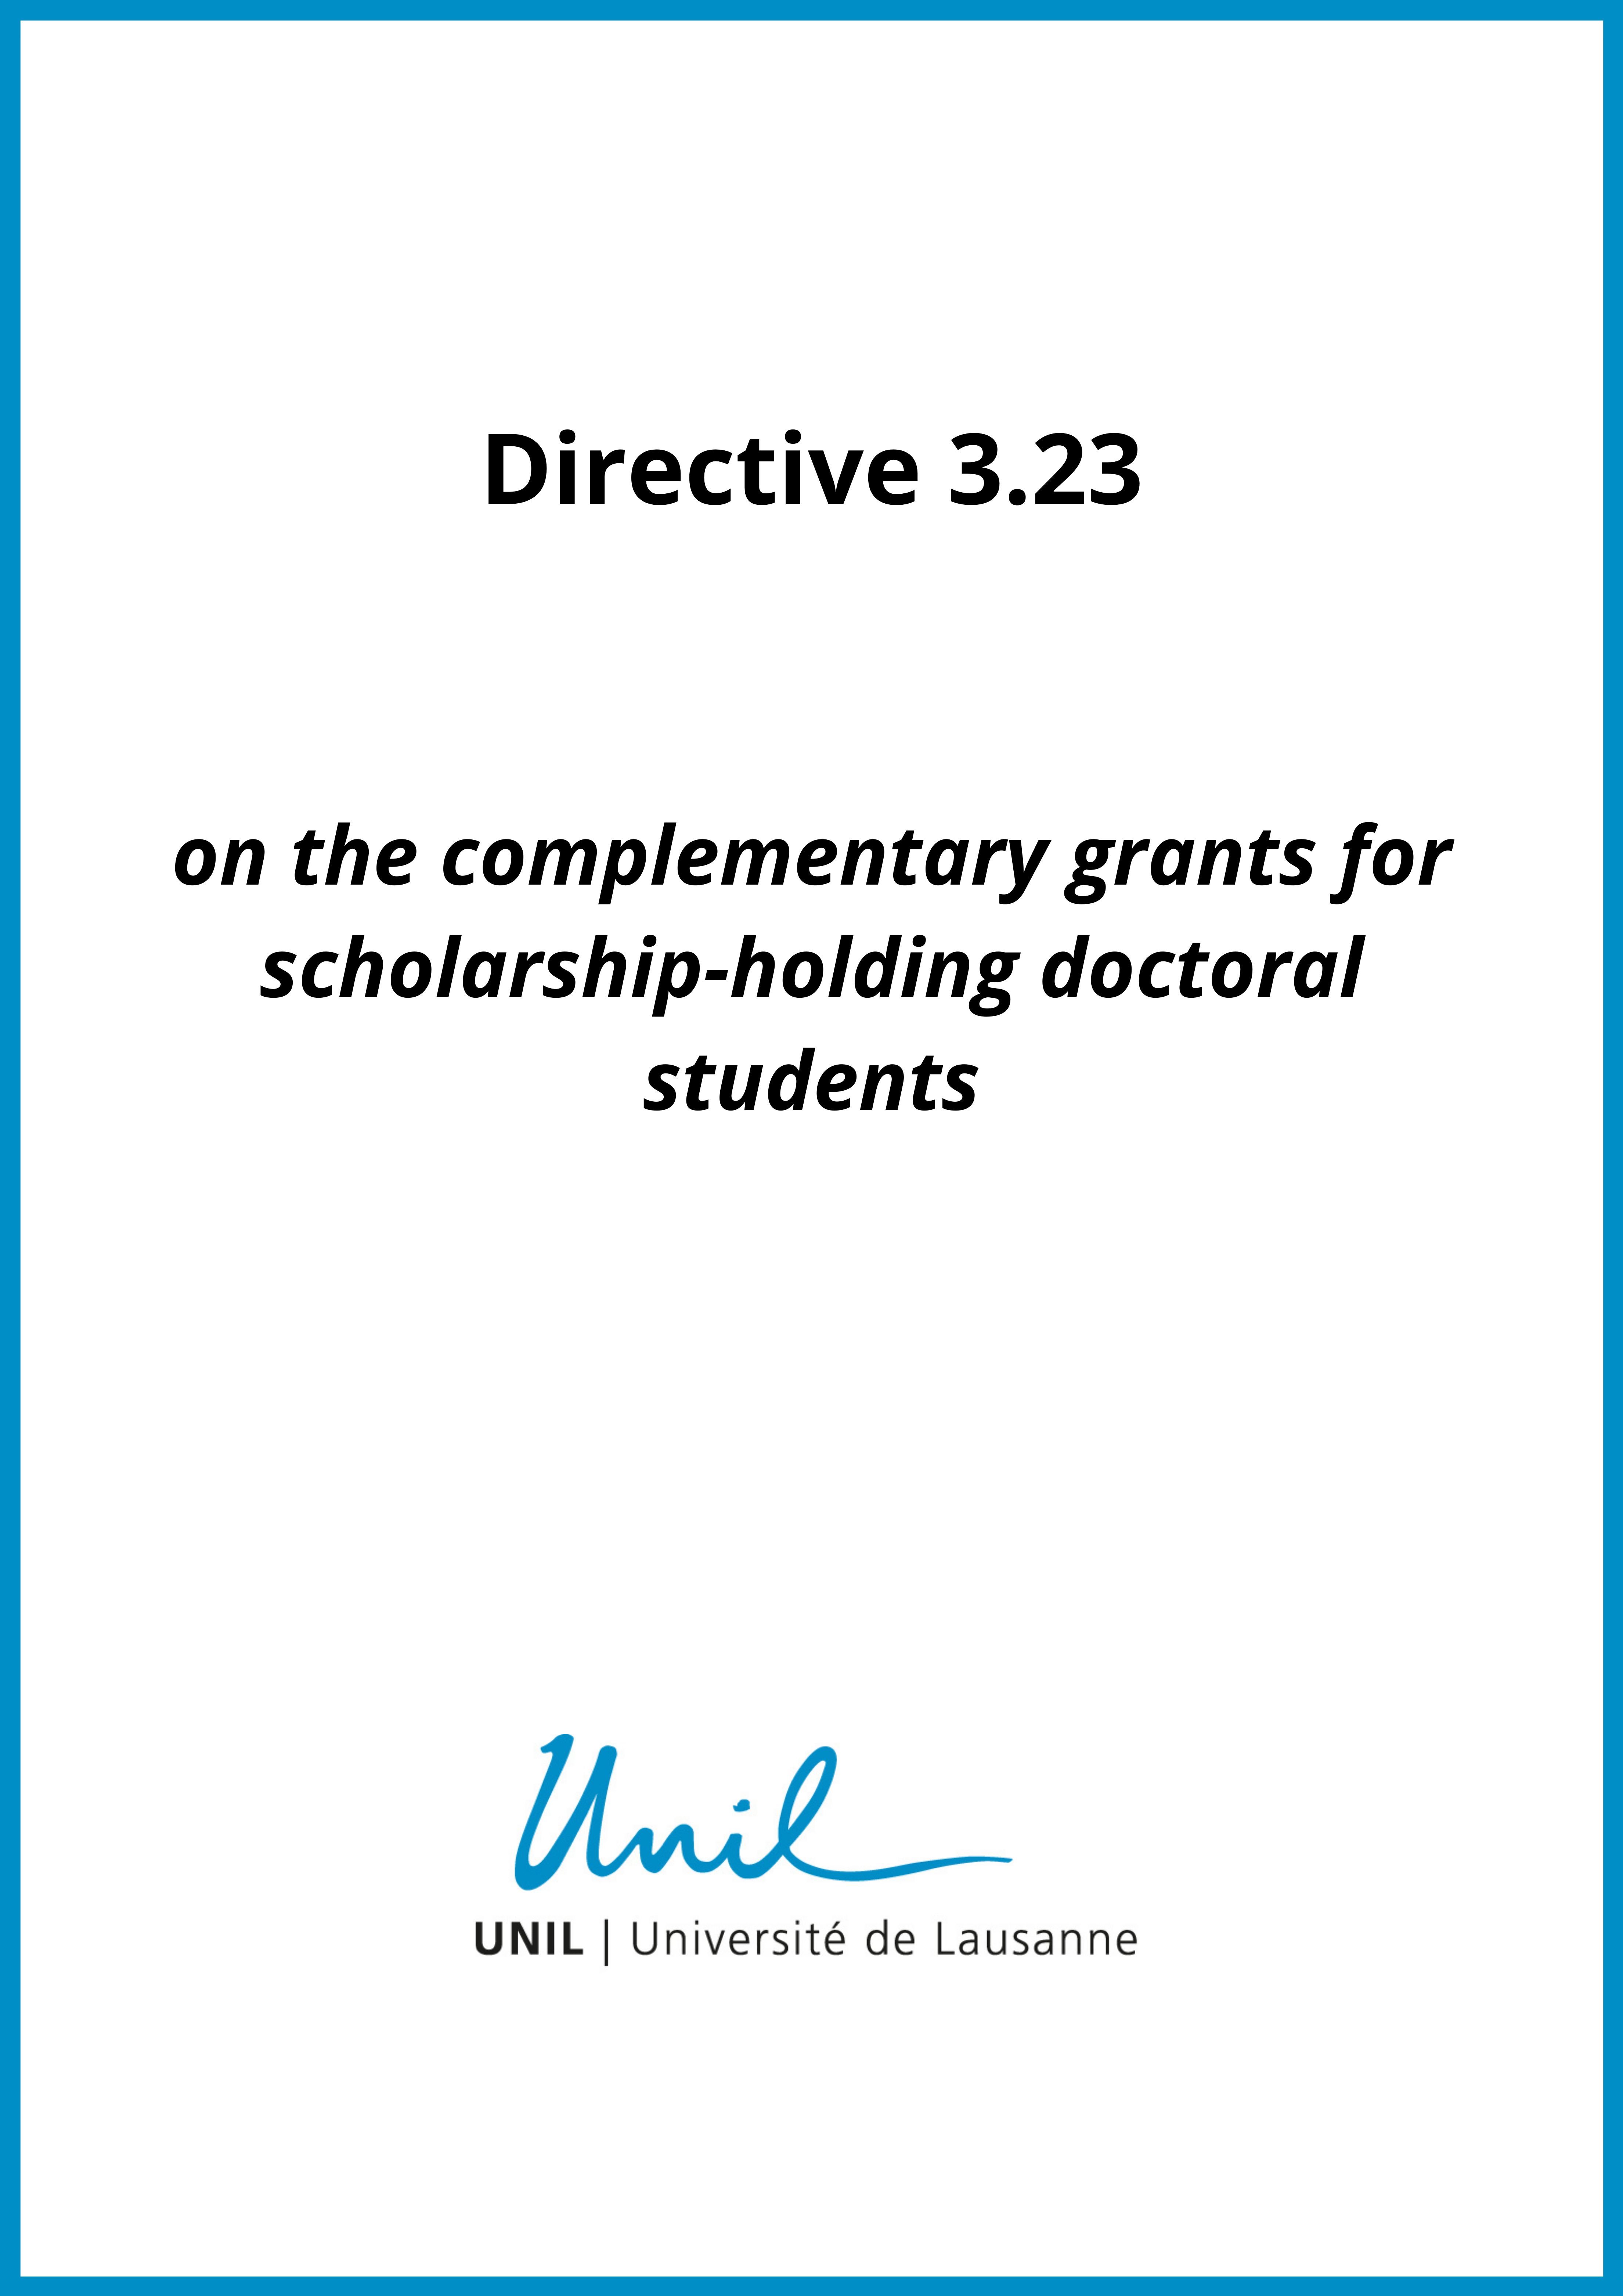 Directive 3.23 (ENG).pdf